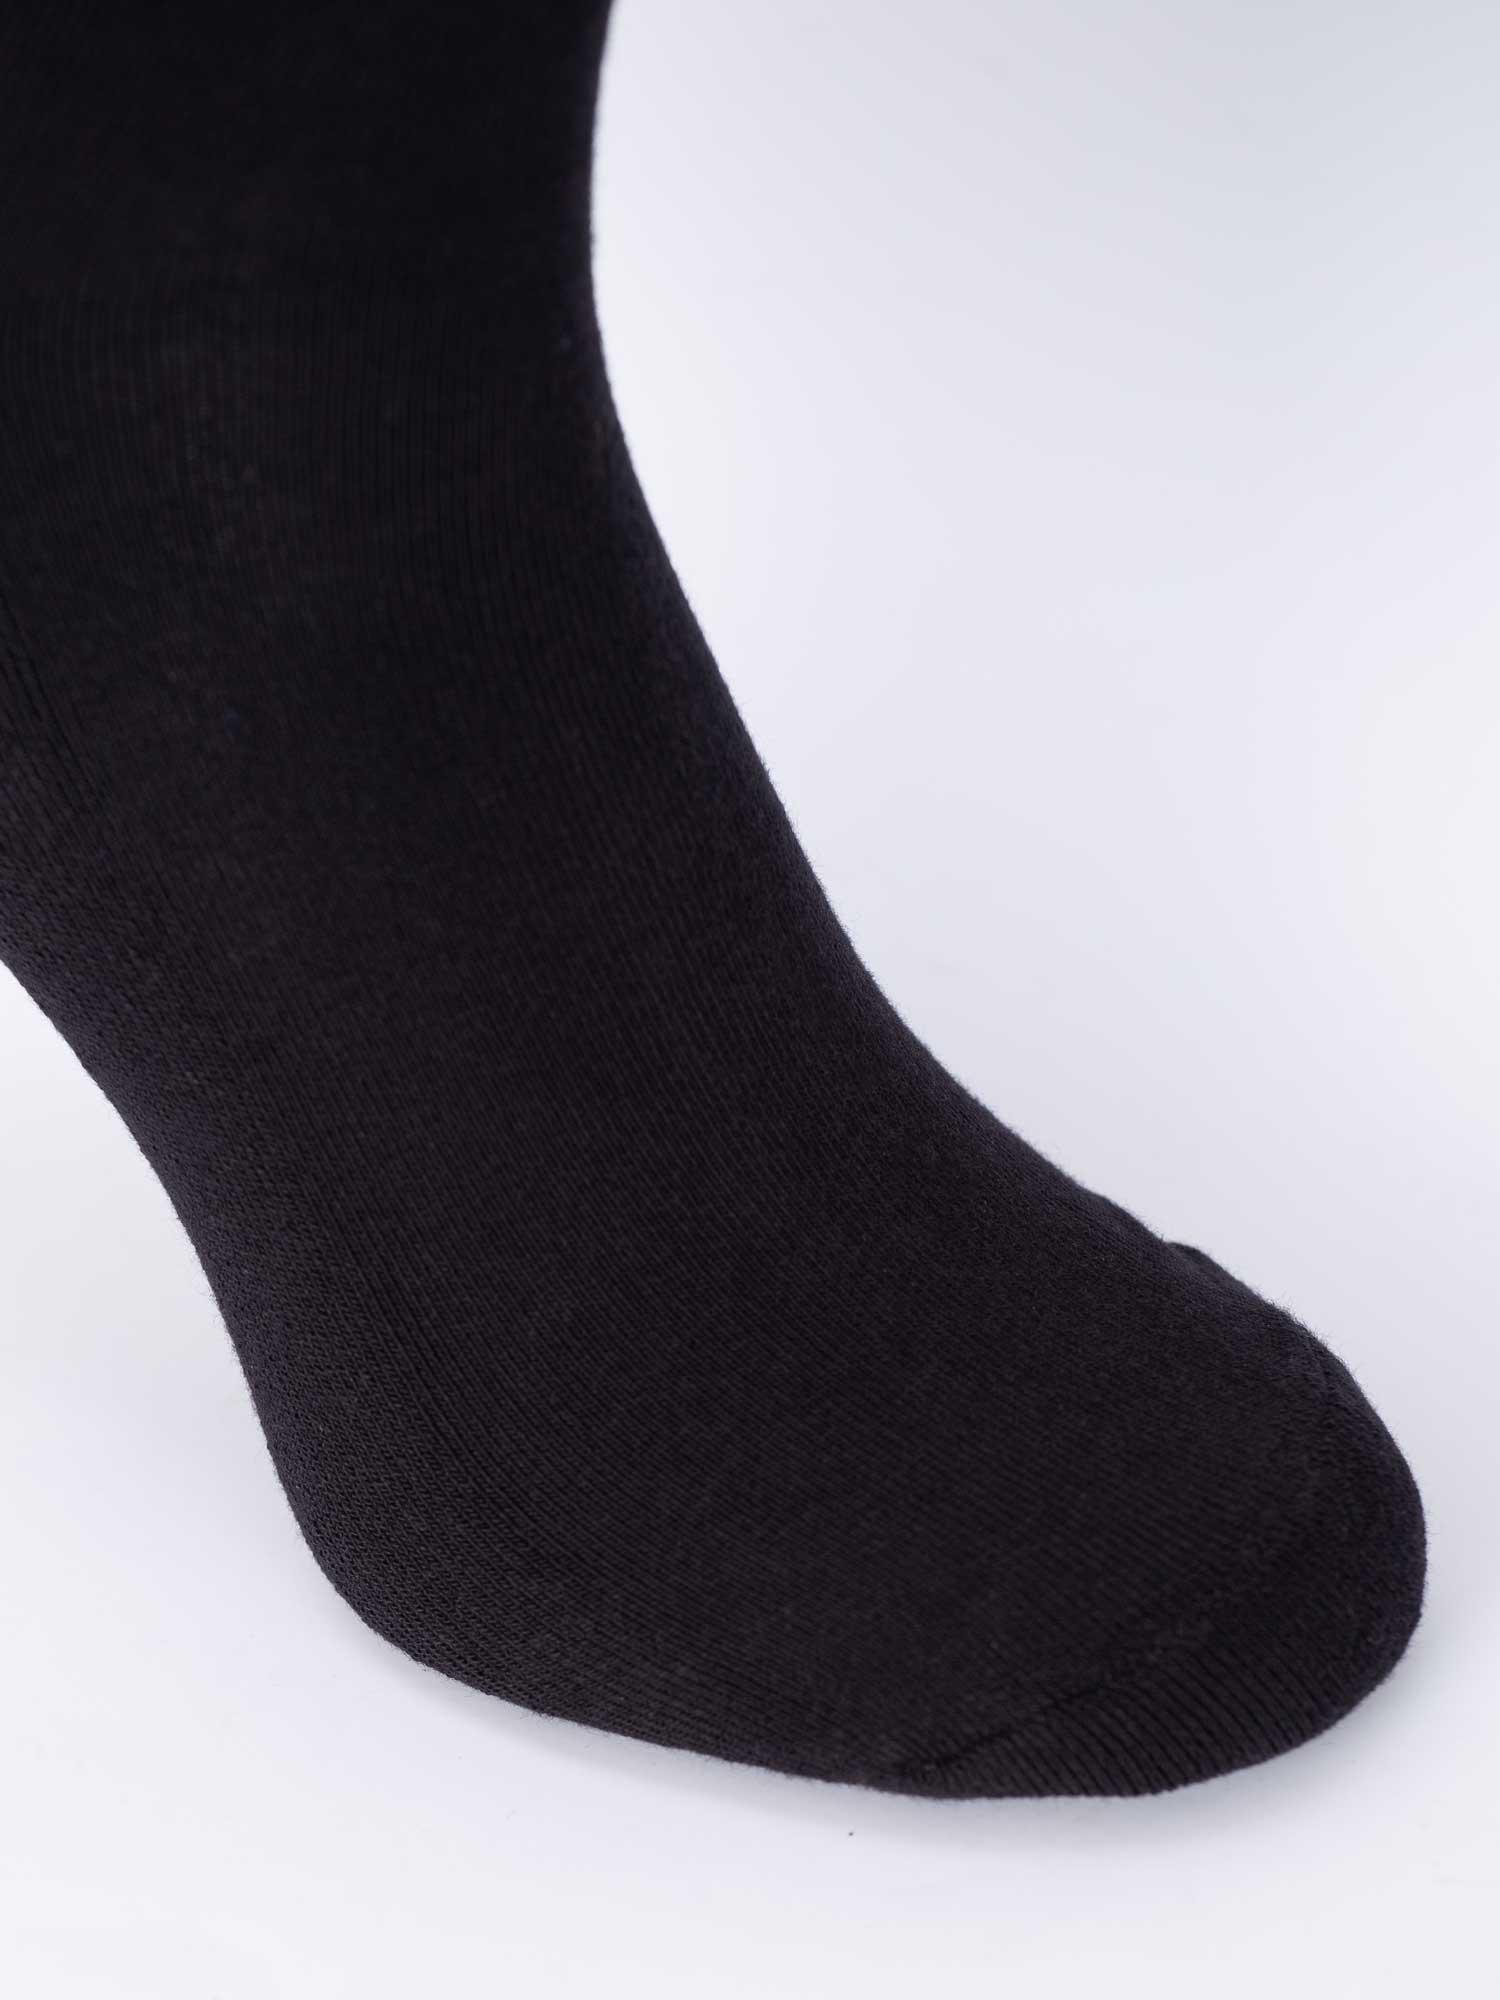 Selected image for BRILLE Čarape Fresh x1 Socks crne